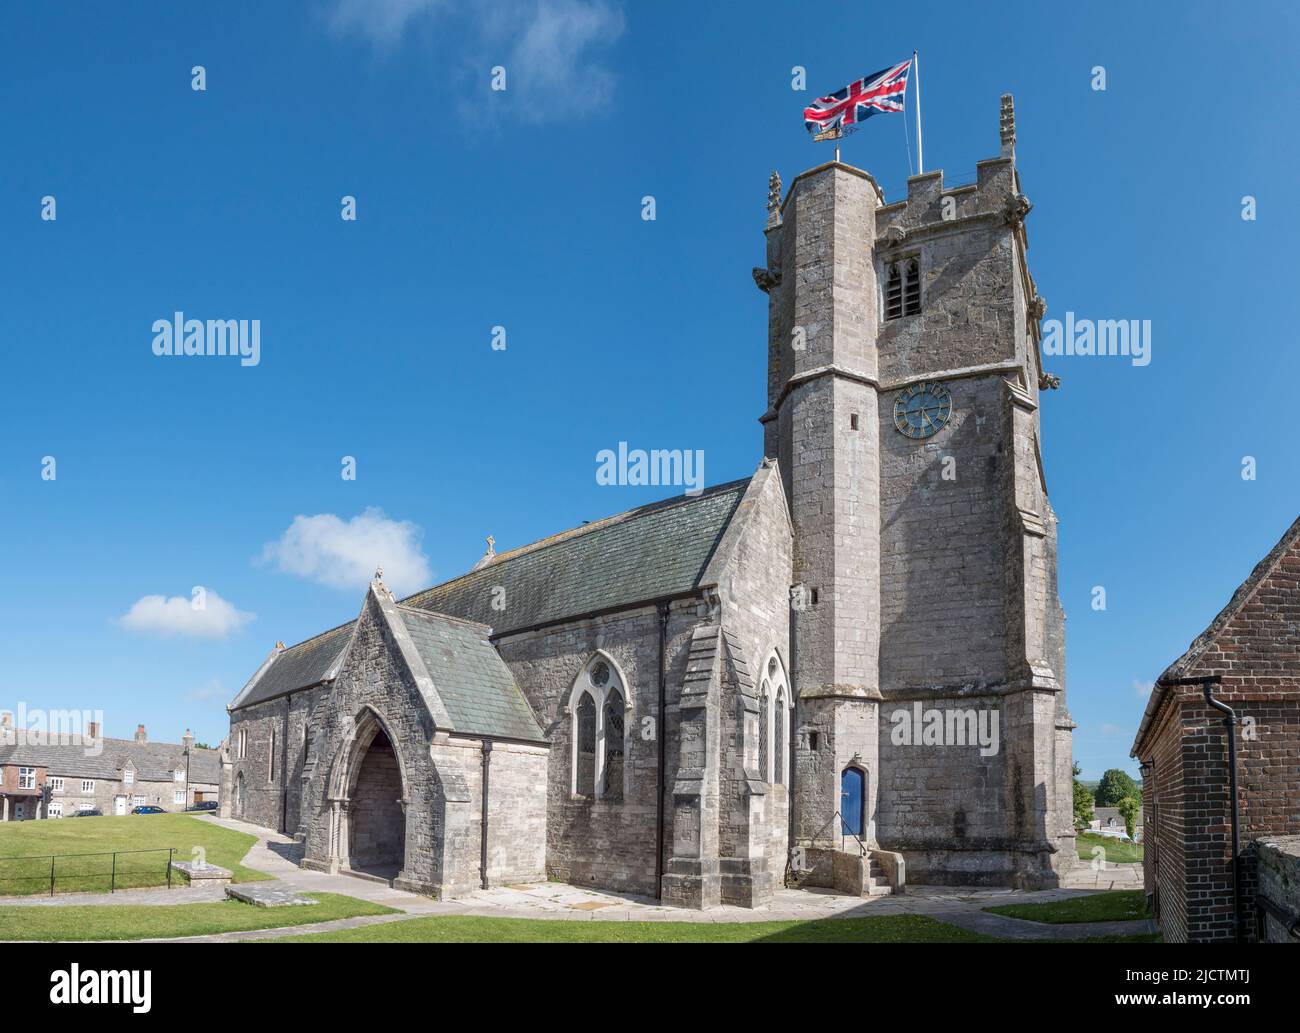 La iglesia de St Edward o St. Edward, rey y mártir (Iglesia Episcopal) en el castillo Corfe, en Dorset, Reino Unido. Foto de stock